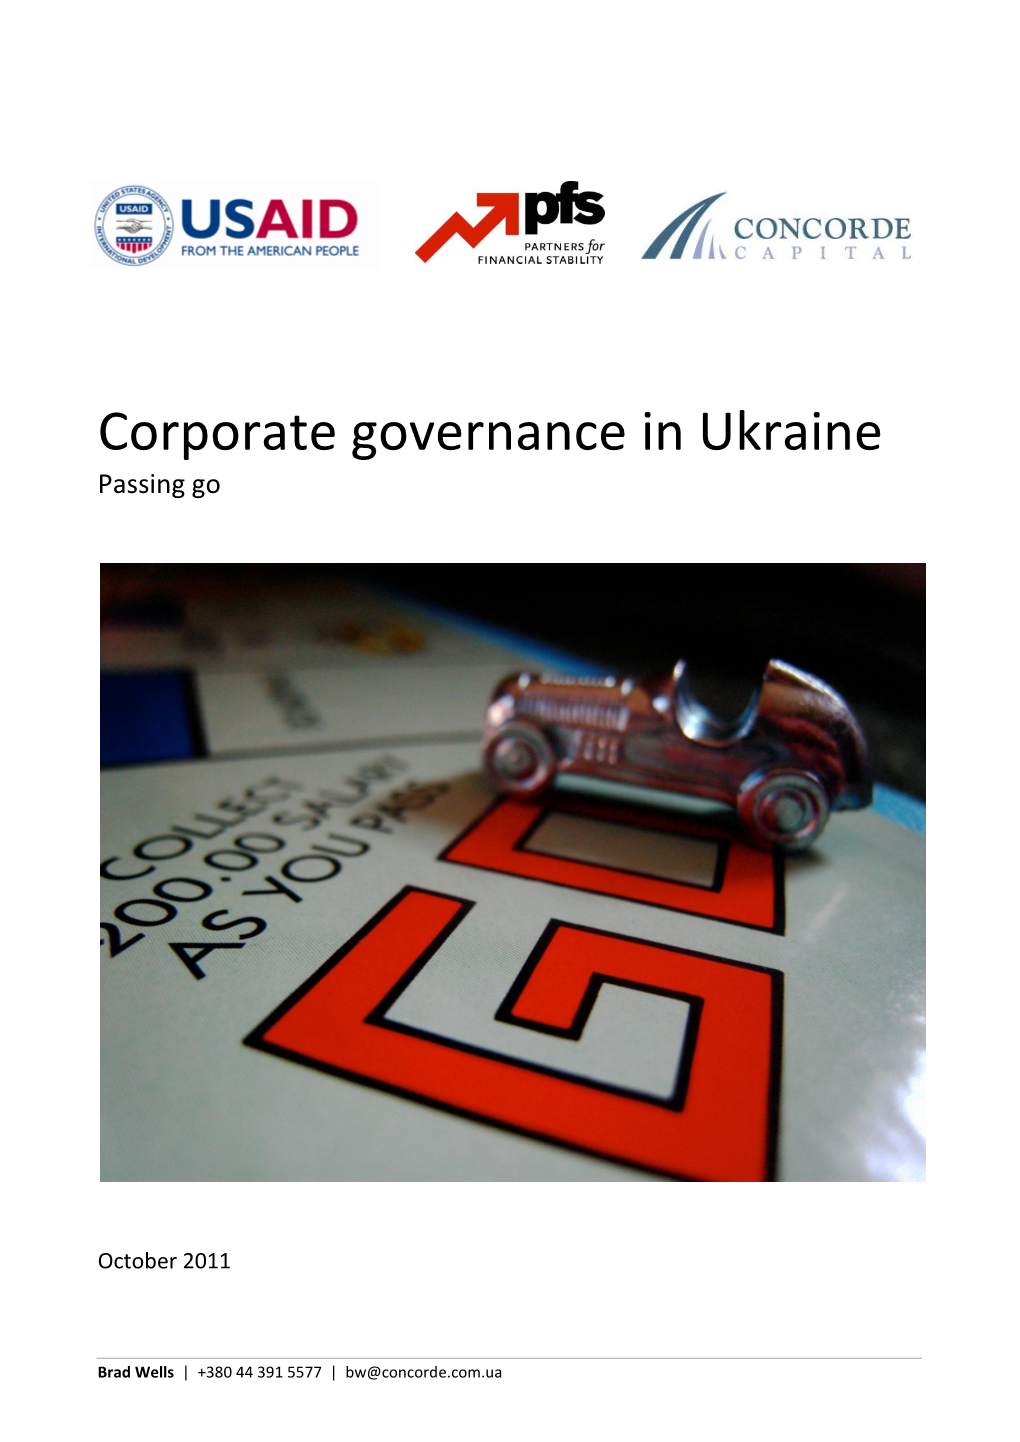 Corporate Governance in Ukraine Passing Go